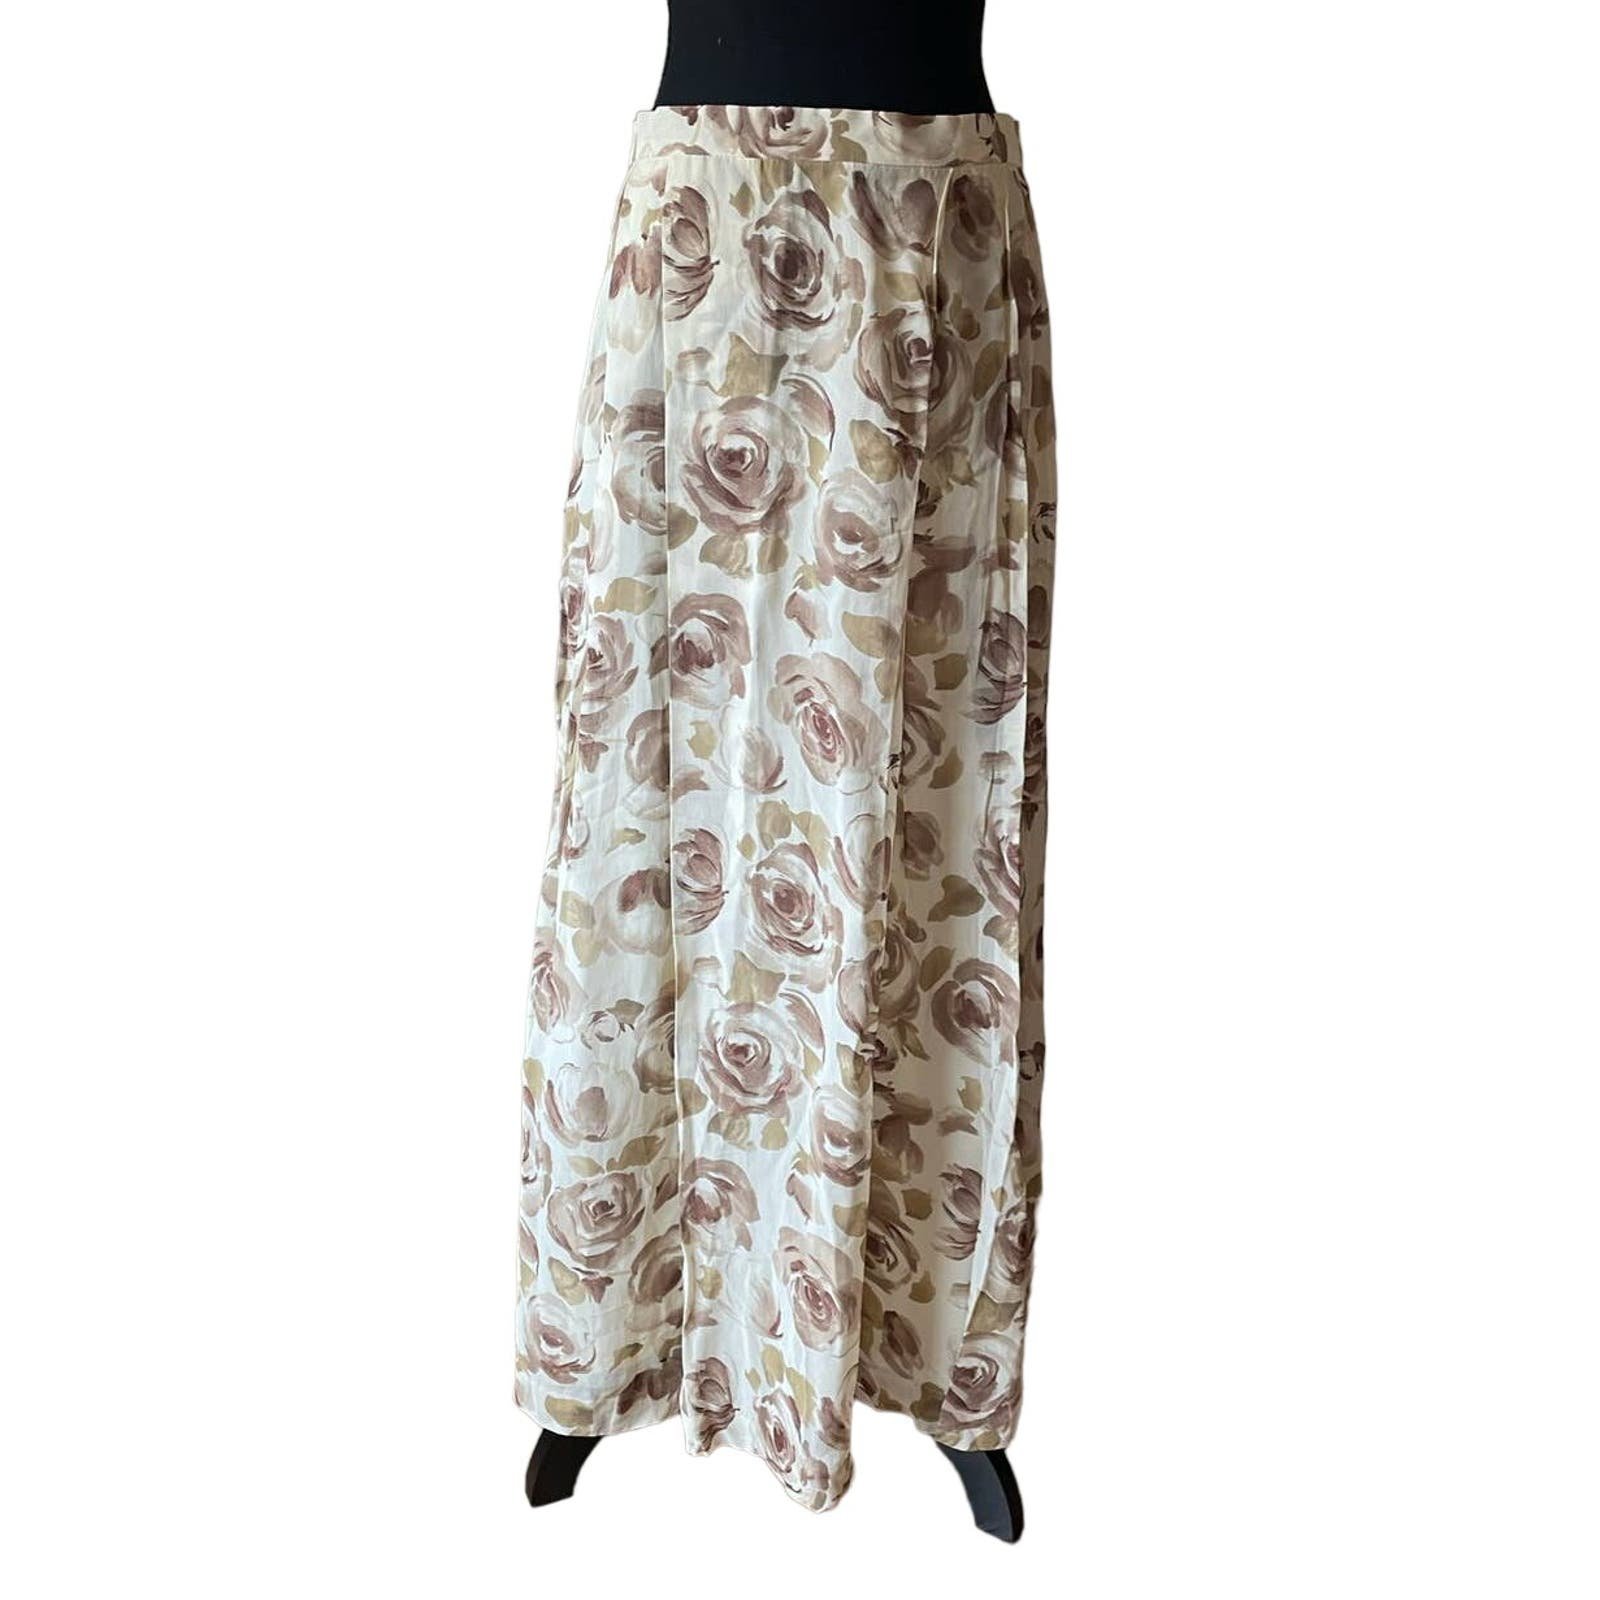 Authentic AUSTIN REED Cream Brown Flower Pattern Maxi Skirt Size 10 JxXHcFuoa best sale